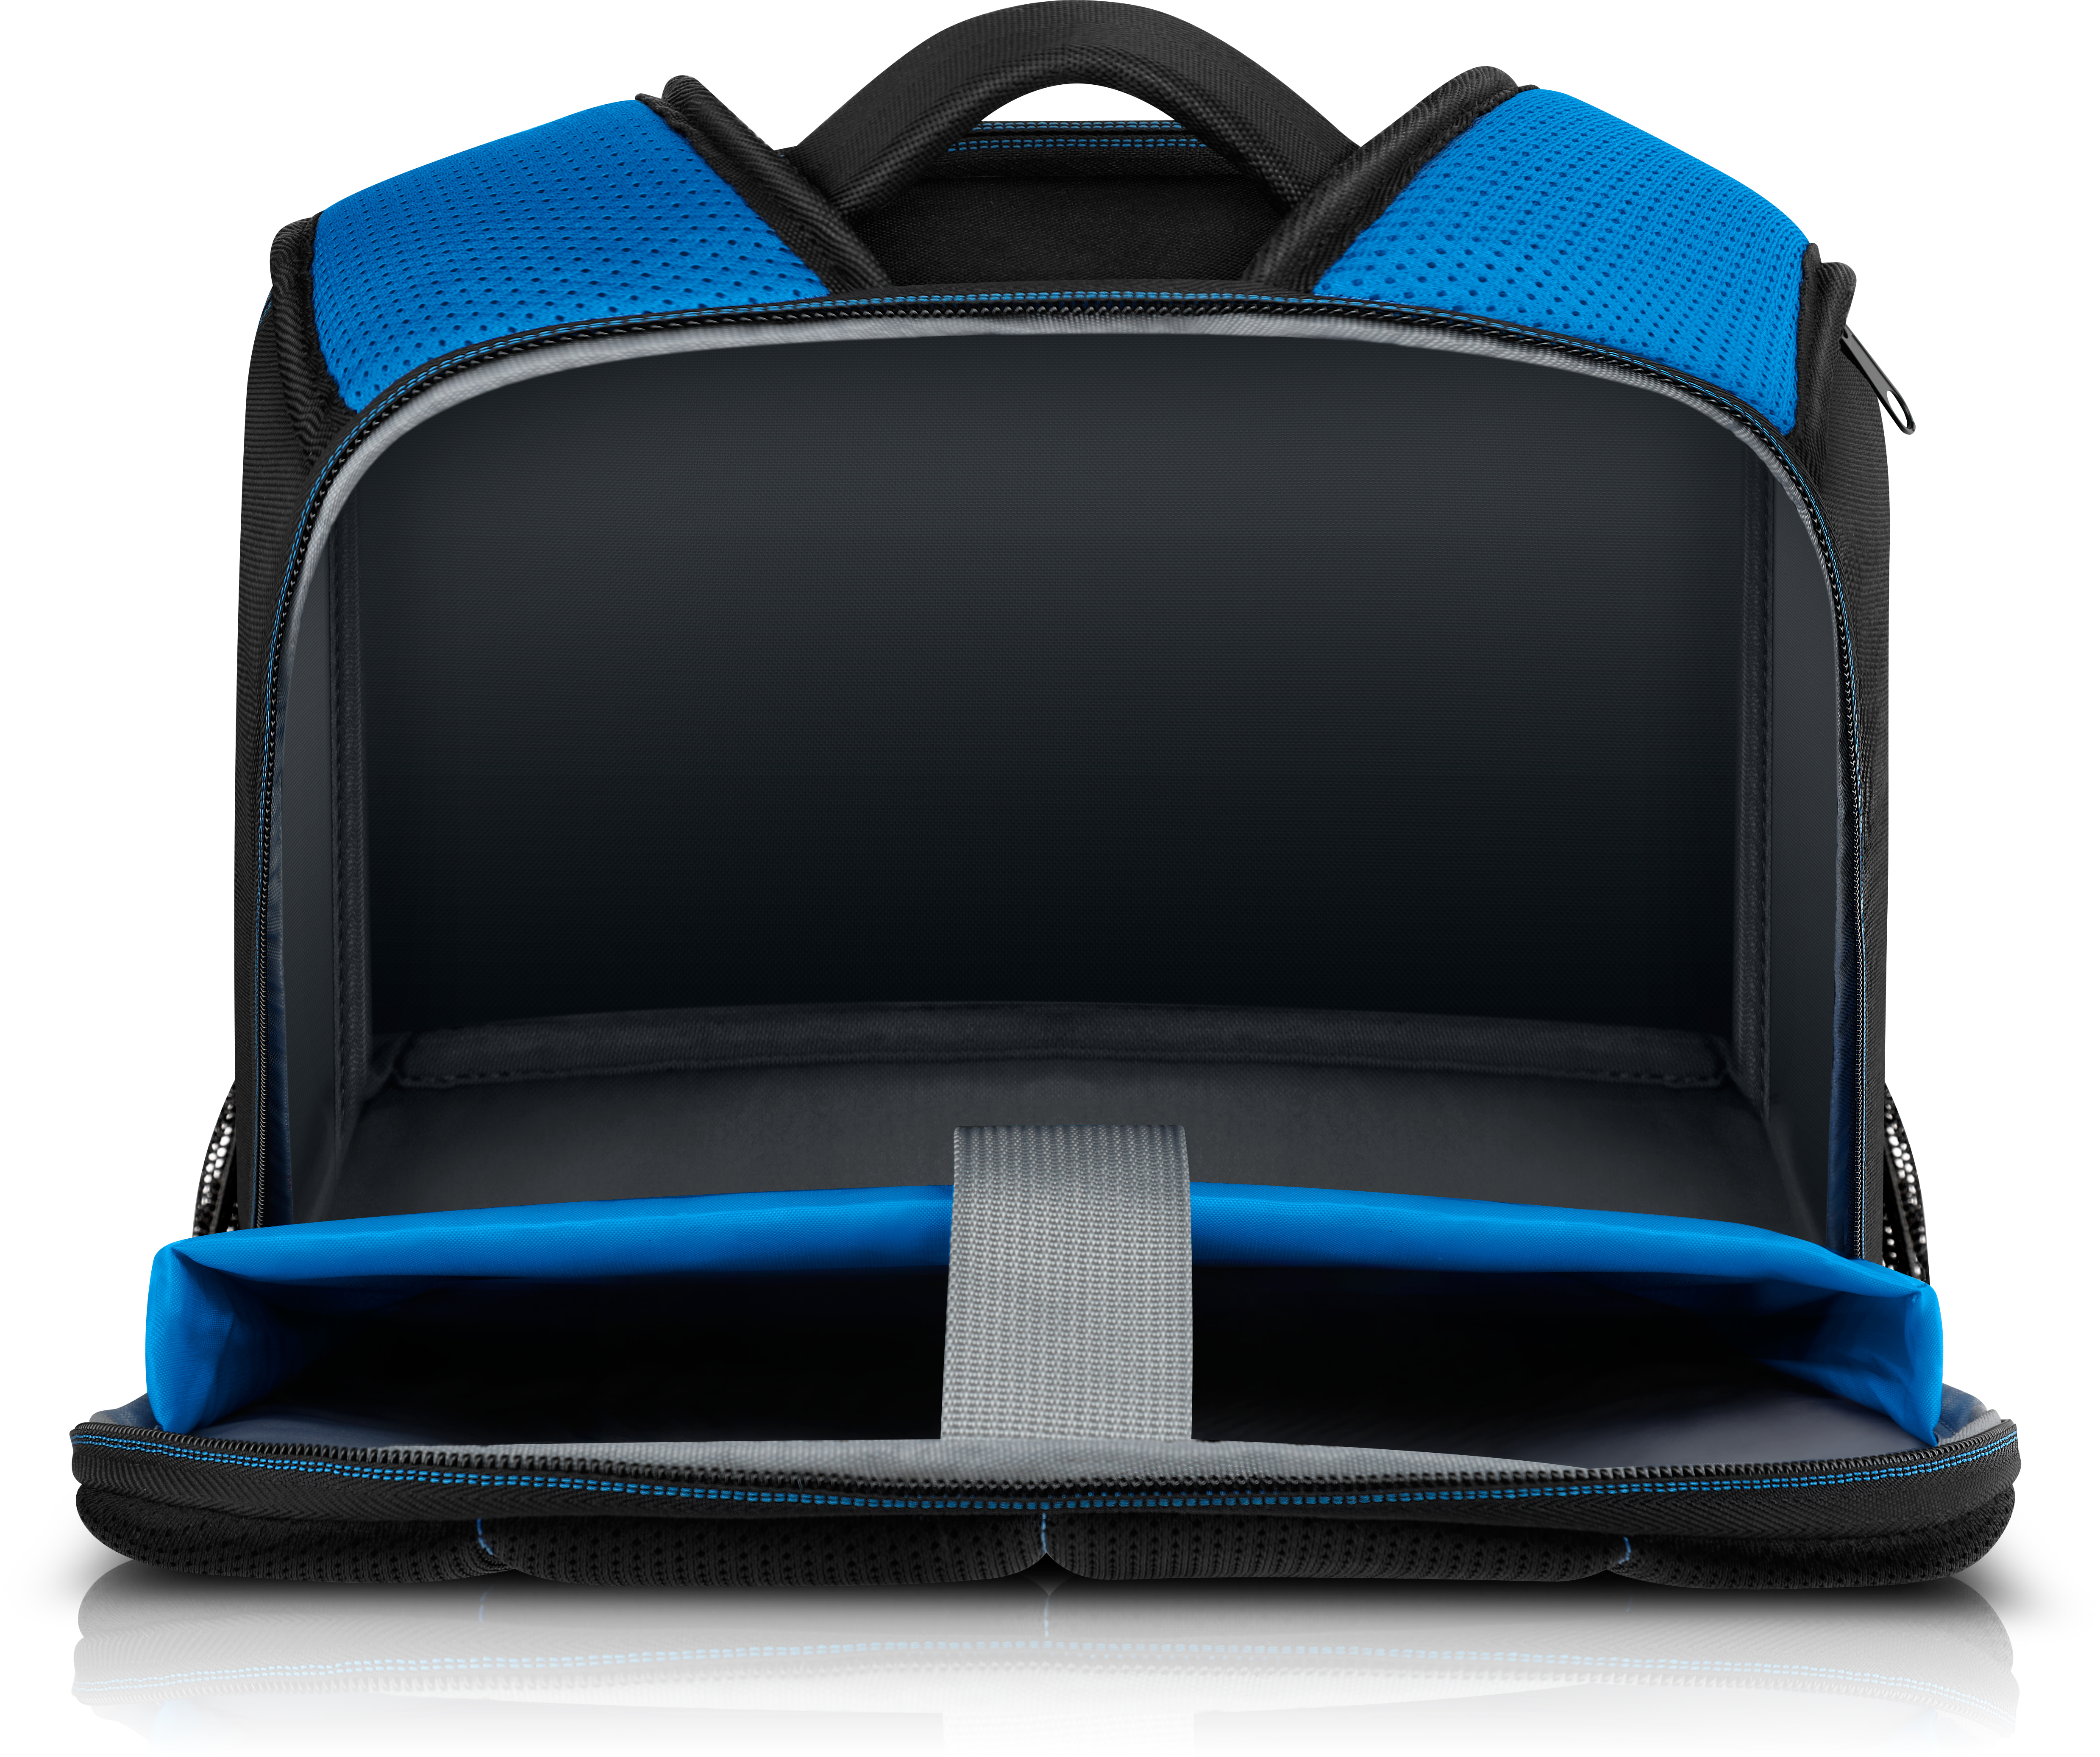 Sac à dos DELL Essential Backpack 15 pour PC Portable 15.6